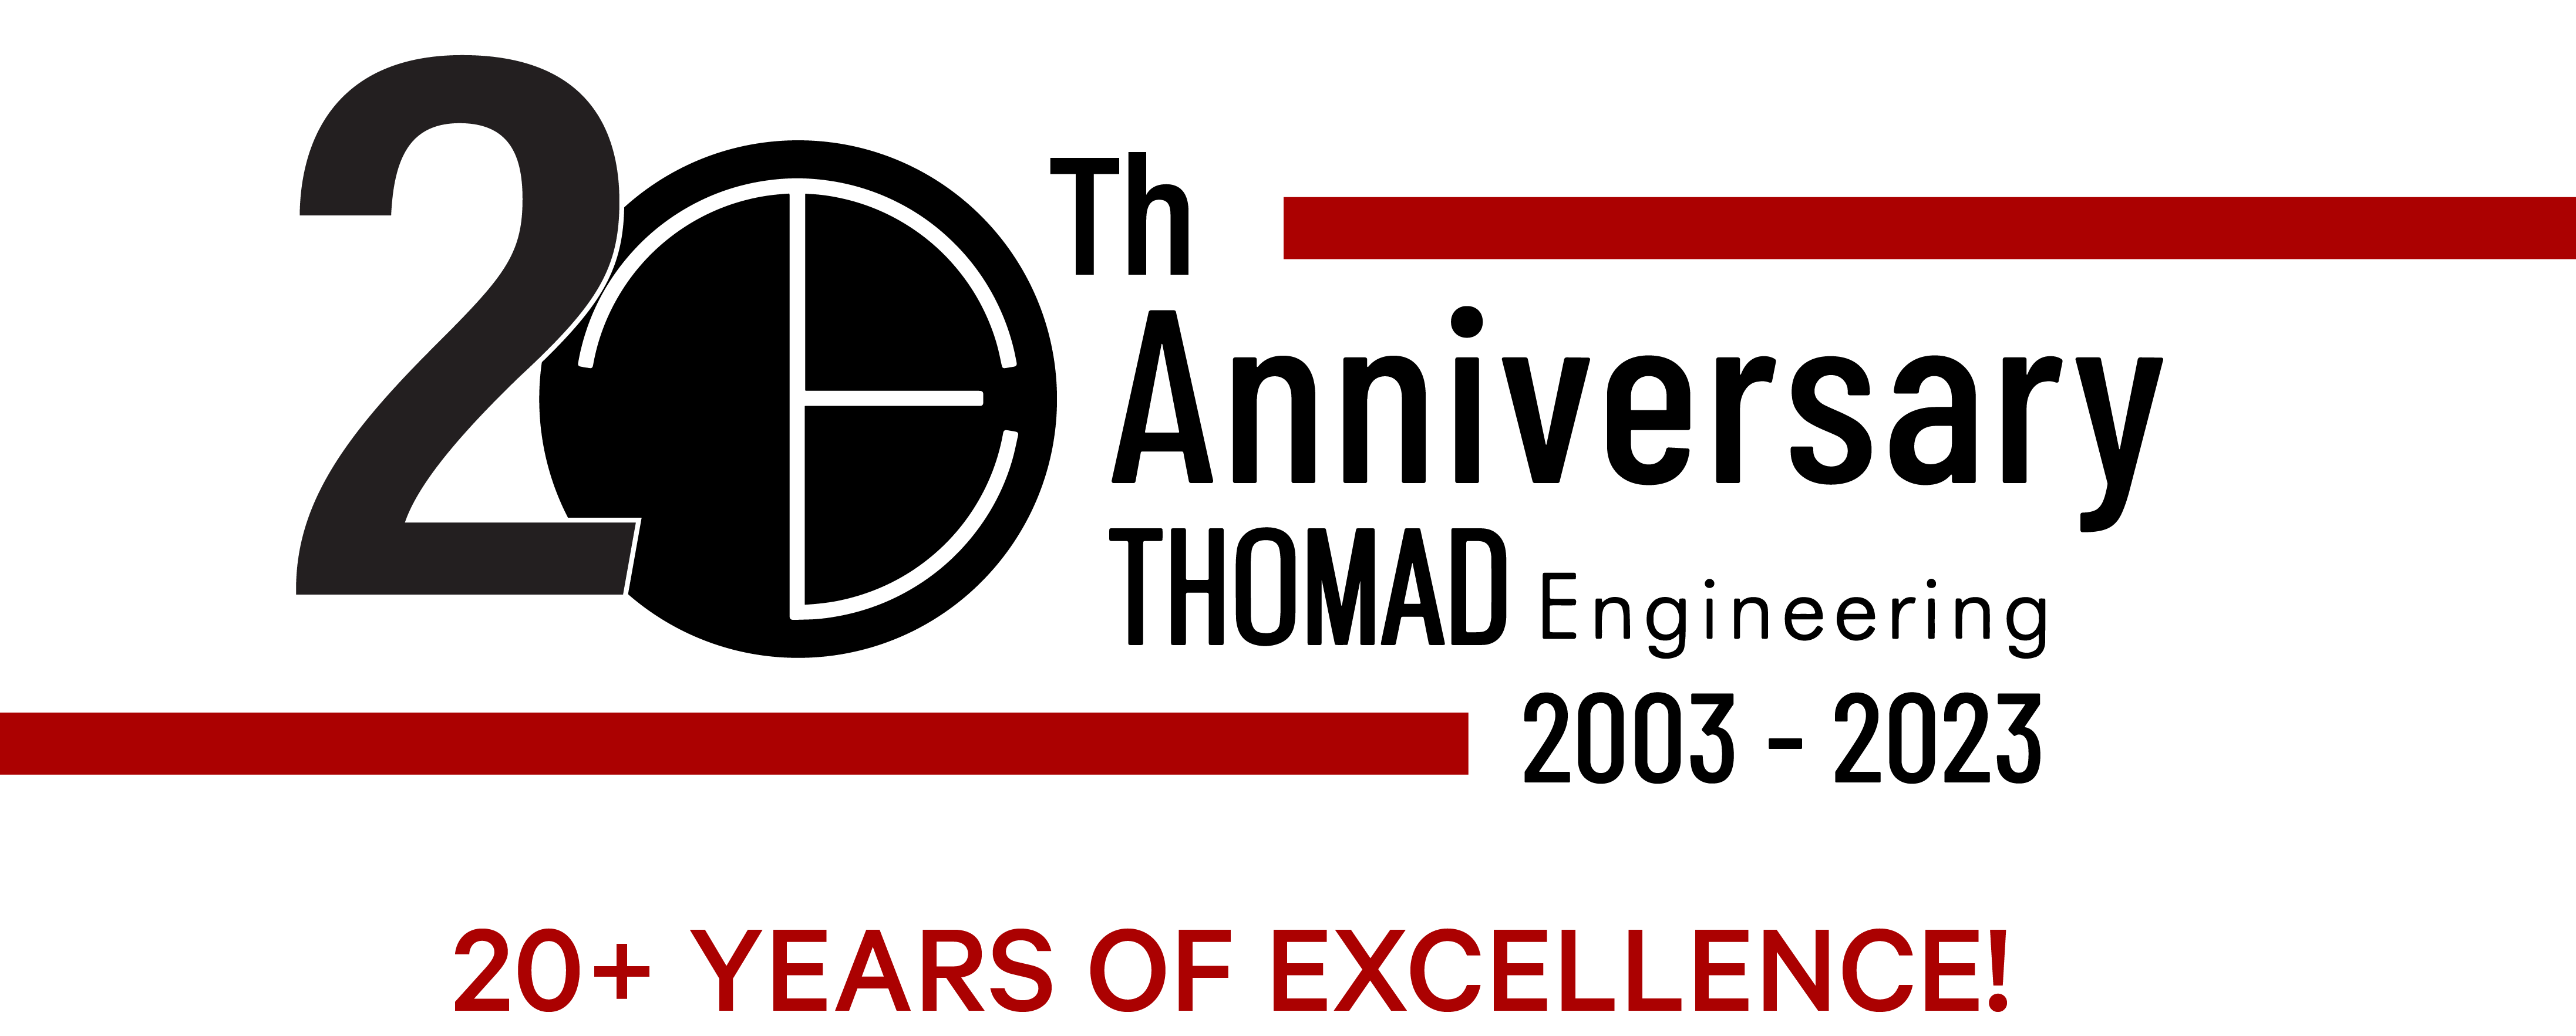 MGM GRAND CONVENTION CENTER - THOMAD Engineering LLC